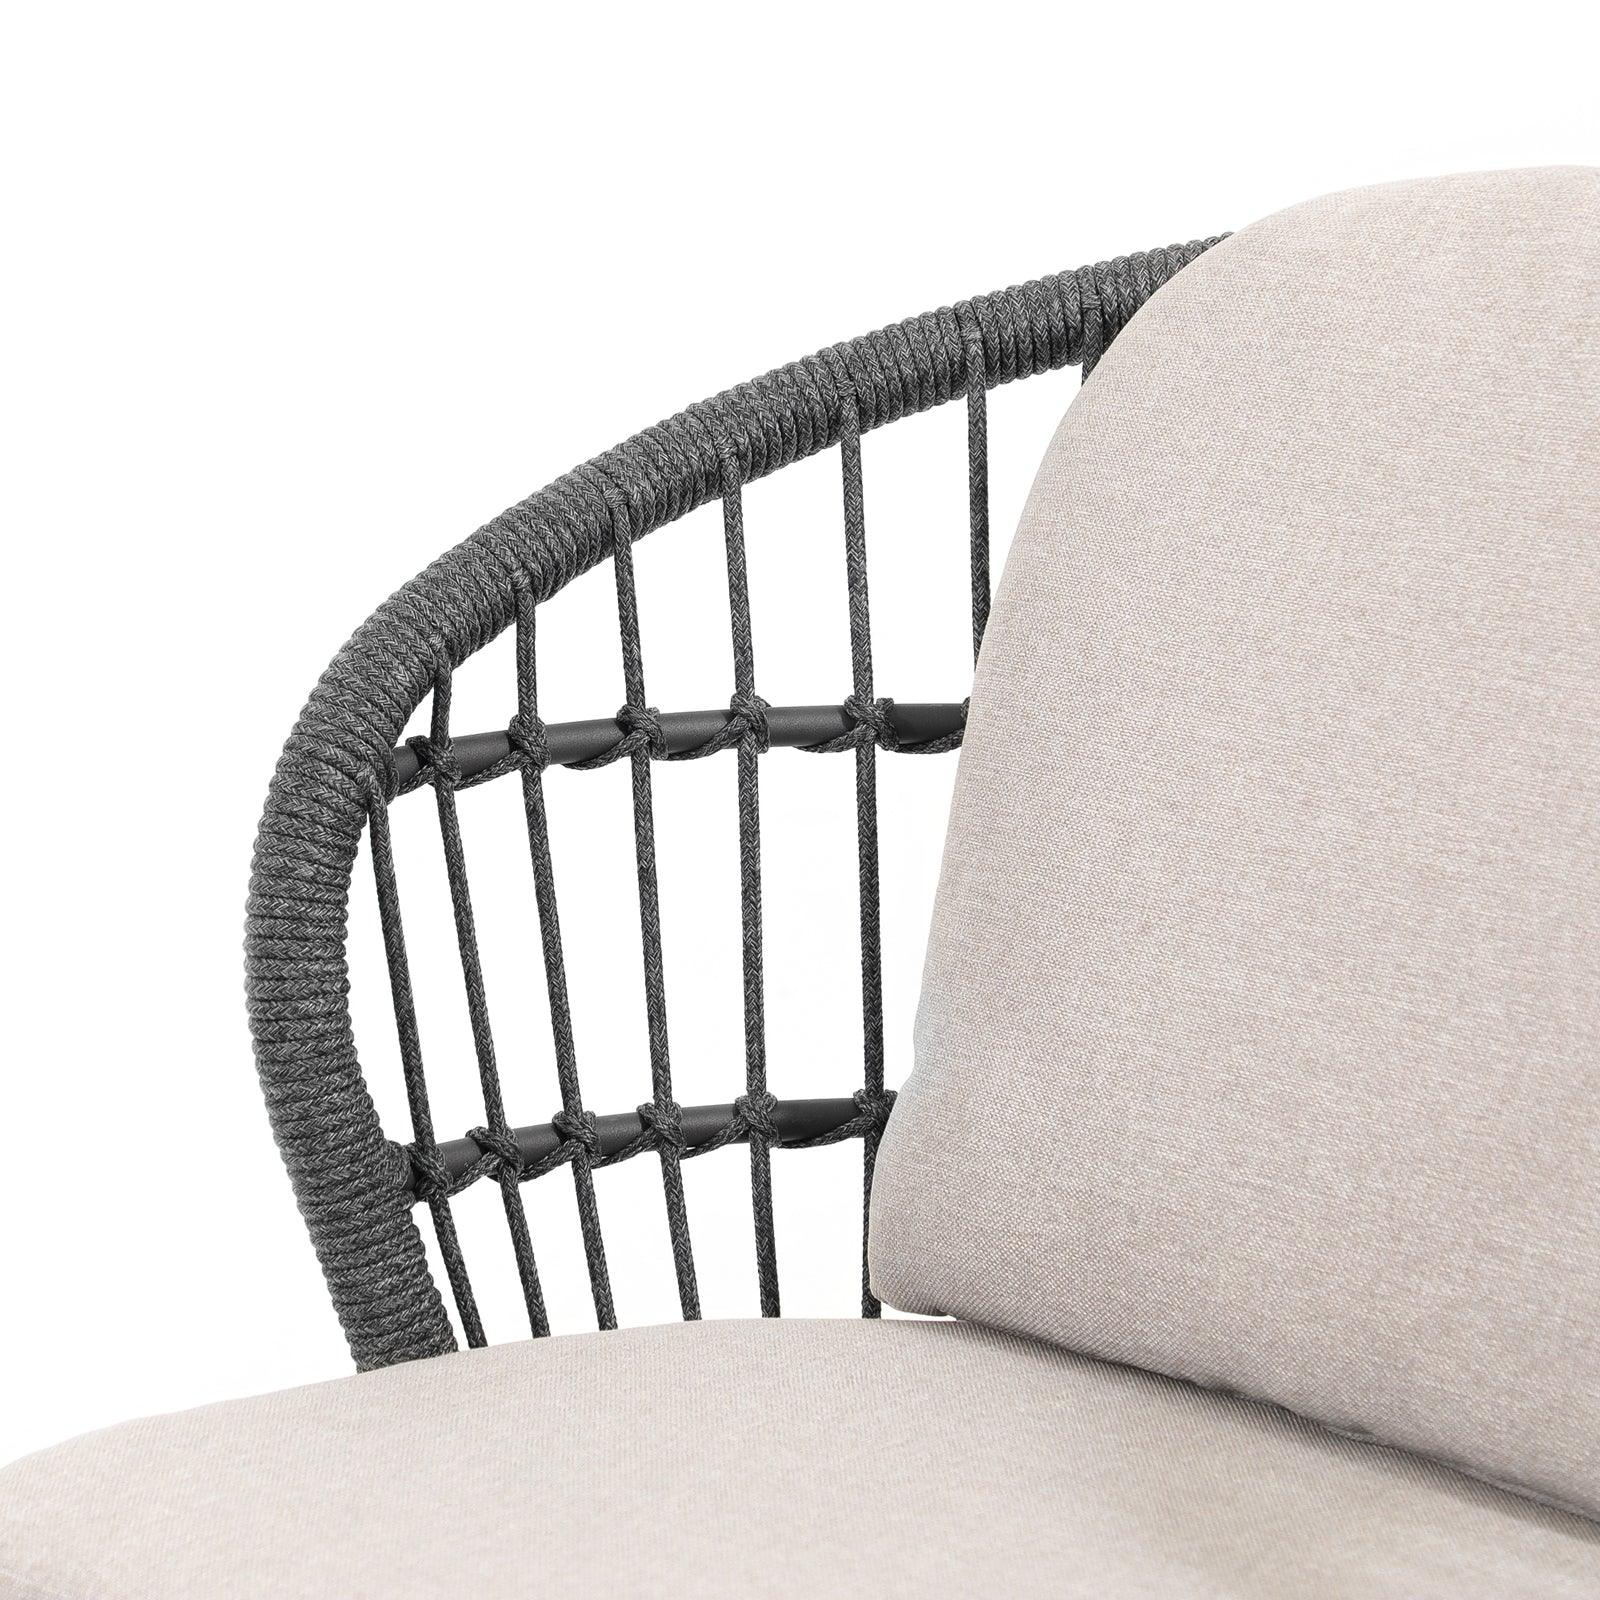 Comino dark grey chair rope and light grey cushion details - Jardina Furniture